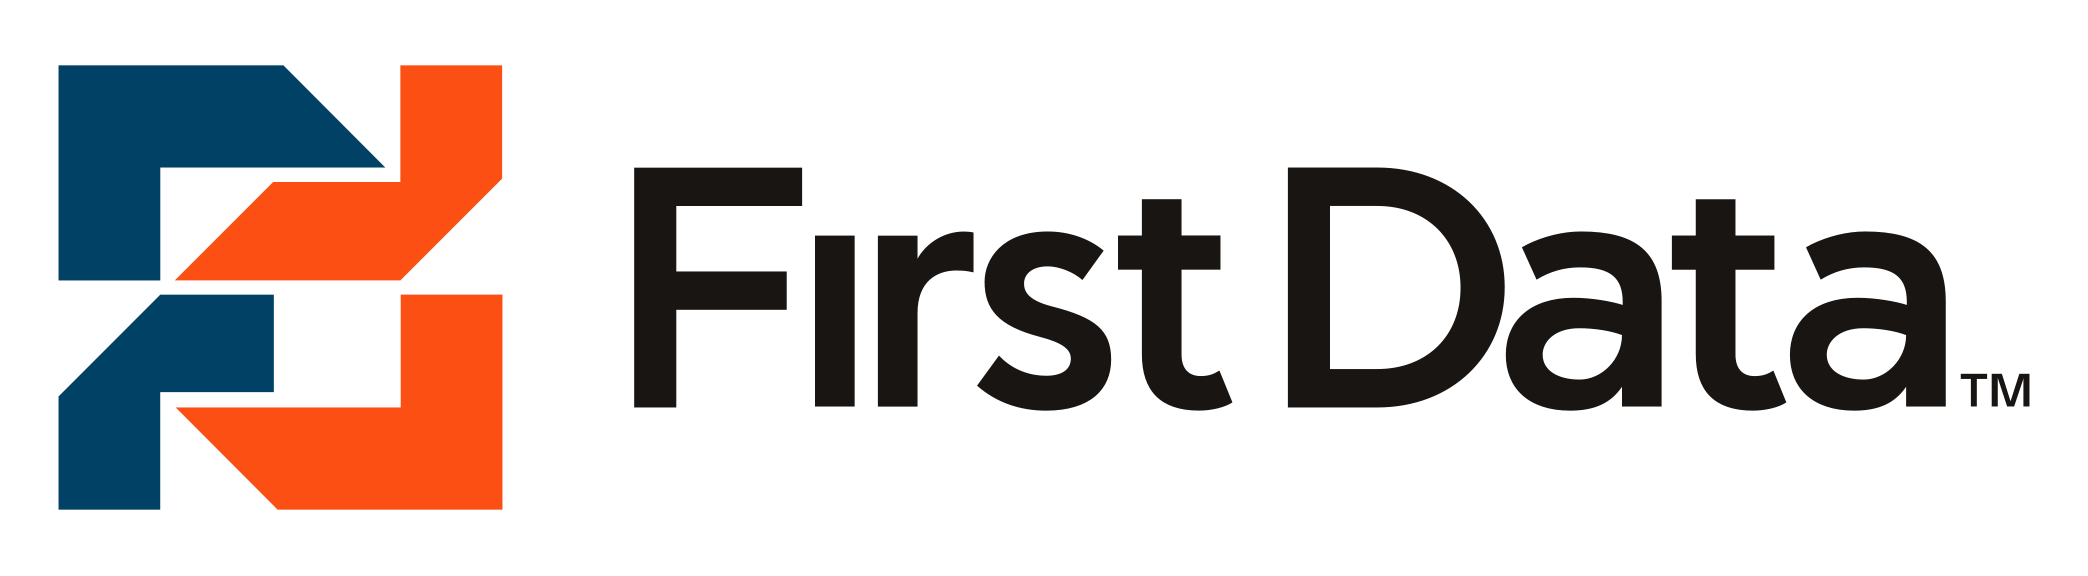 First Data Logo PNG Image.